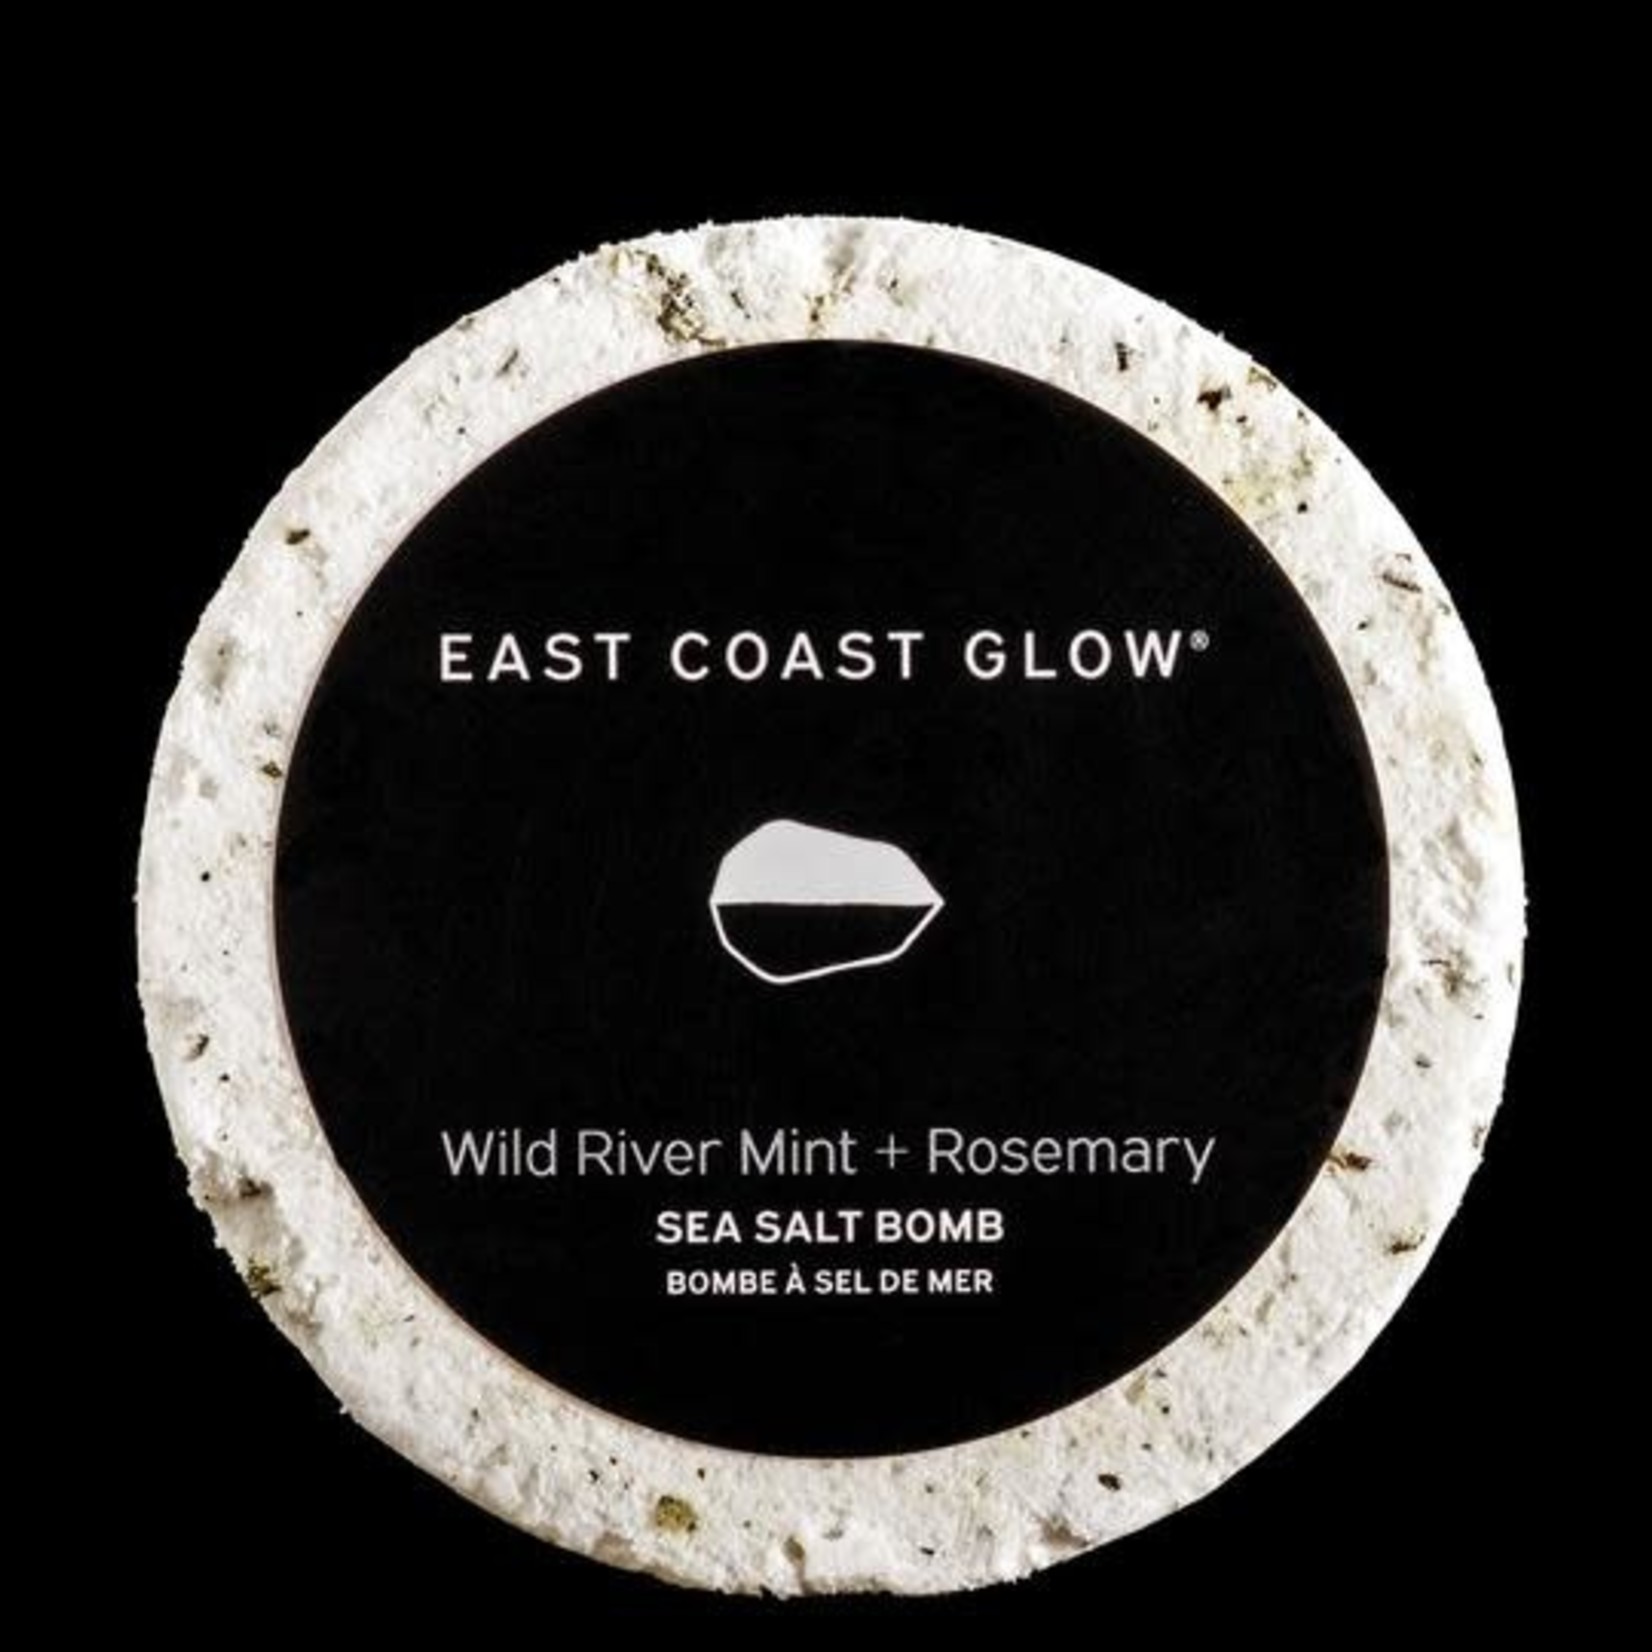 East Coast Glow East Coast Glow Wild River Mint + Rosemary Sea Salt Bomb